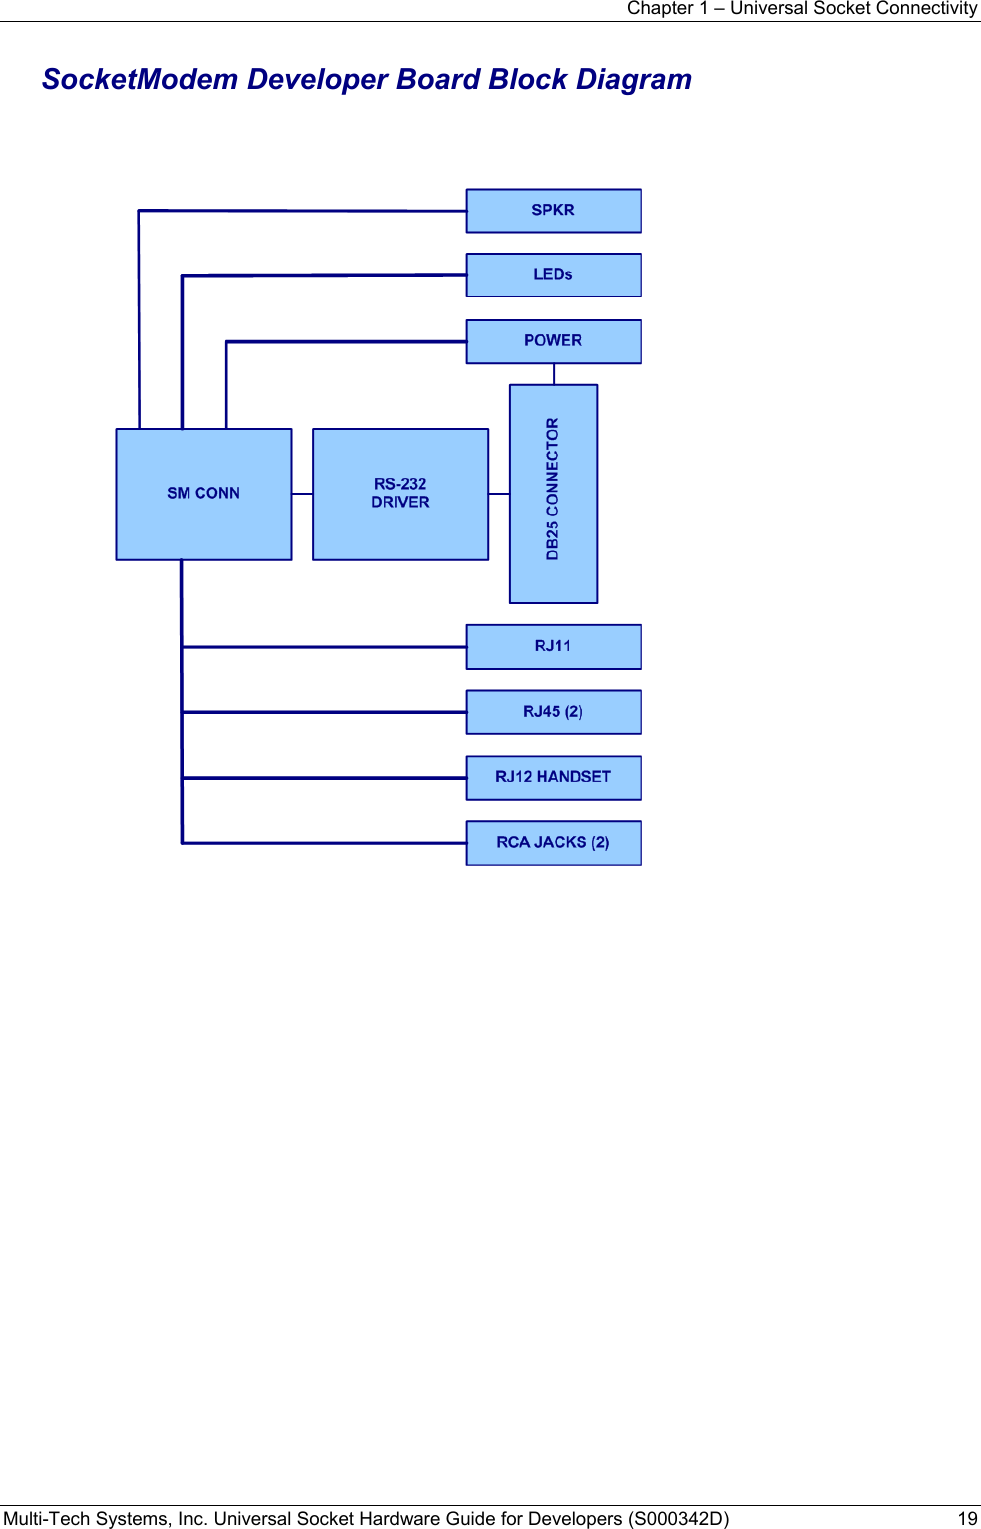 Chapter 1 – Universal Socket Connectivity Multi-Tech Systems, Inc. Universal Socket Hardware Guide for Developers (S000342D)  19  SocketModem Developer Board Block Diagram         